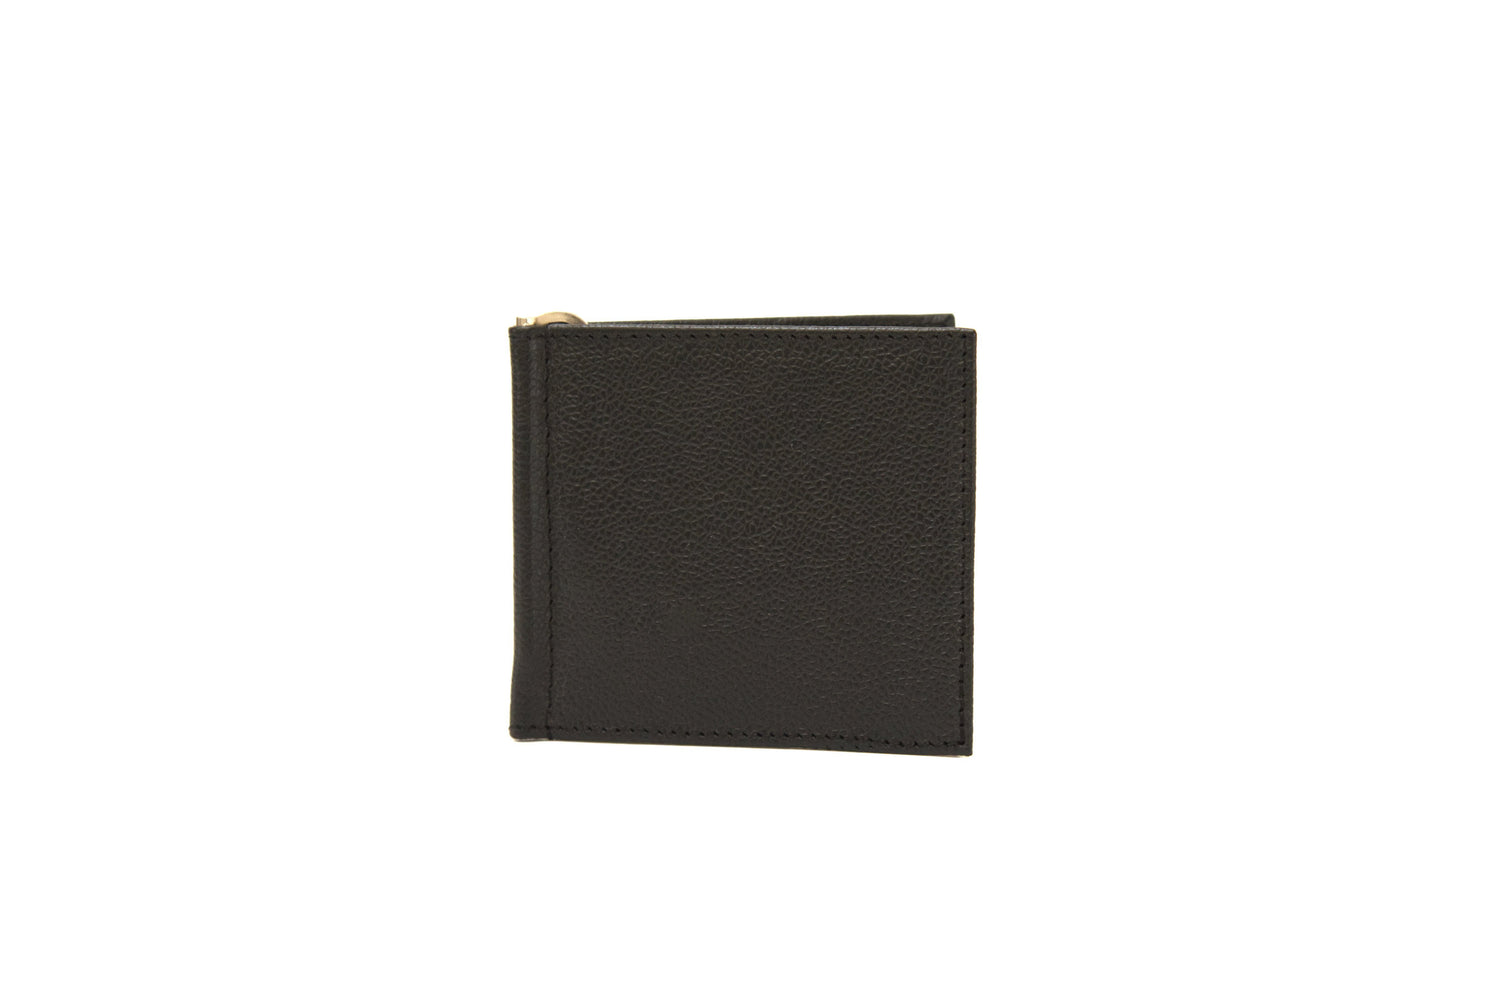 Clip Wallet by  Adelphi.